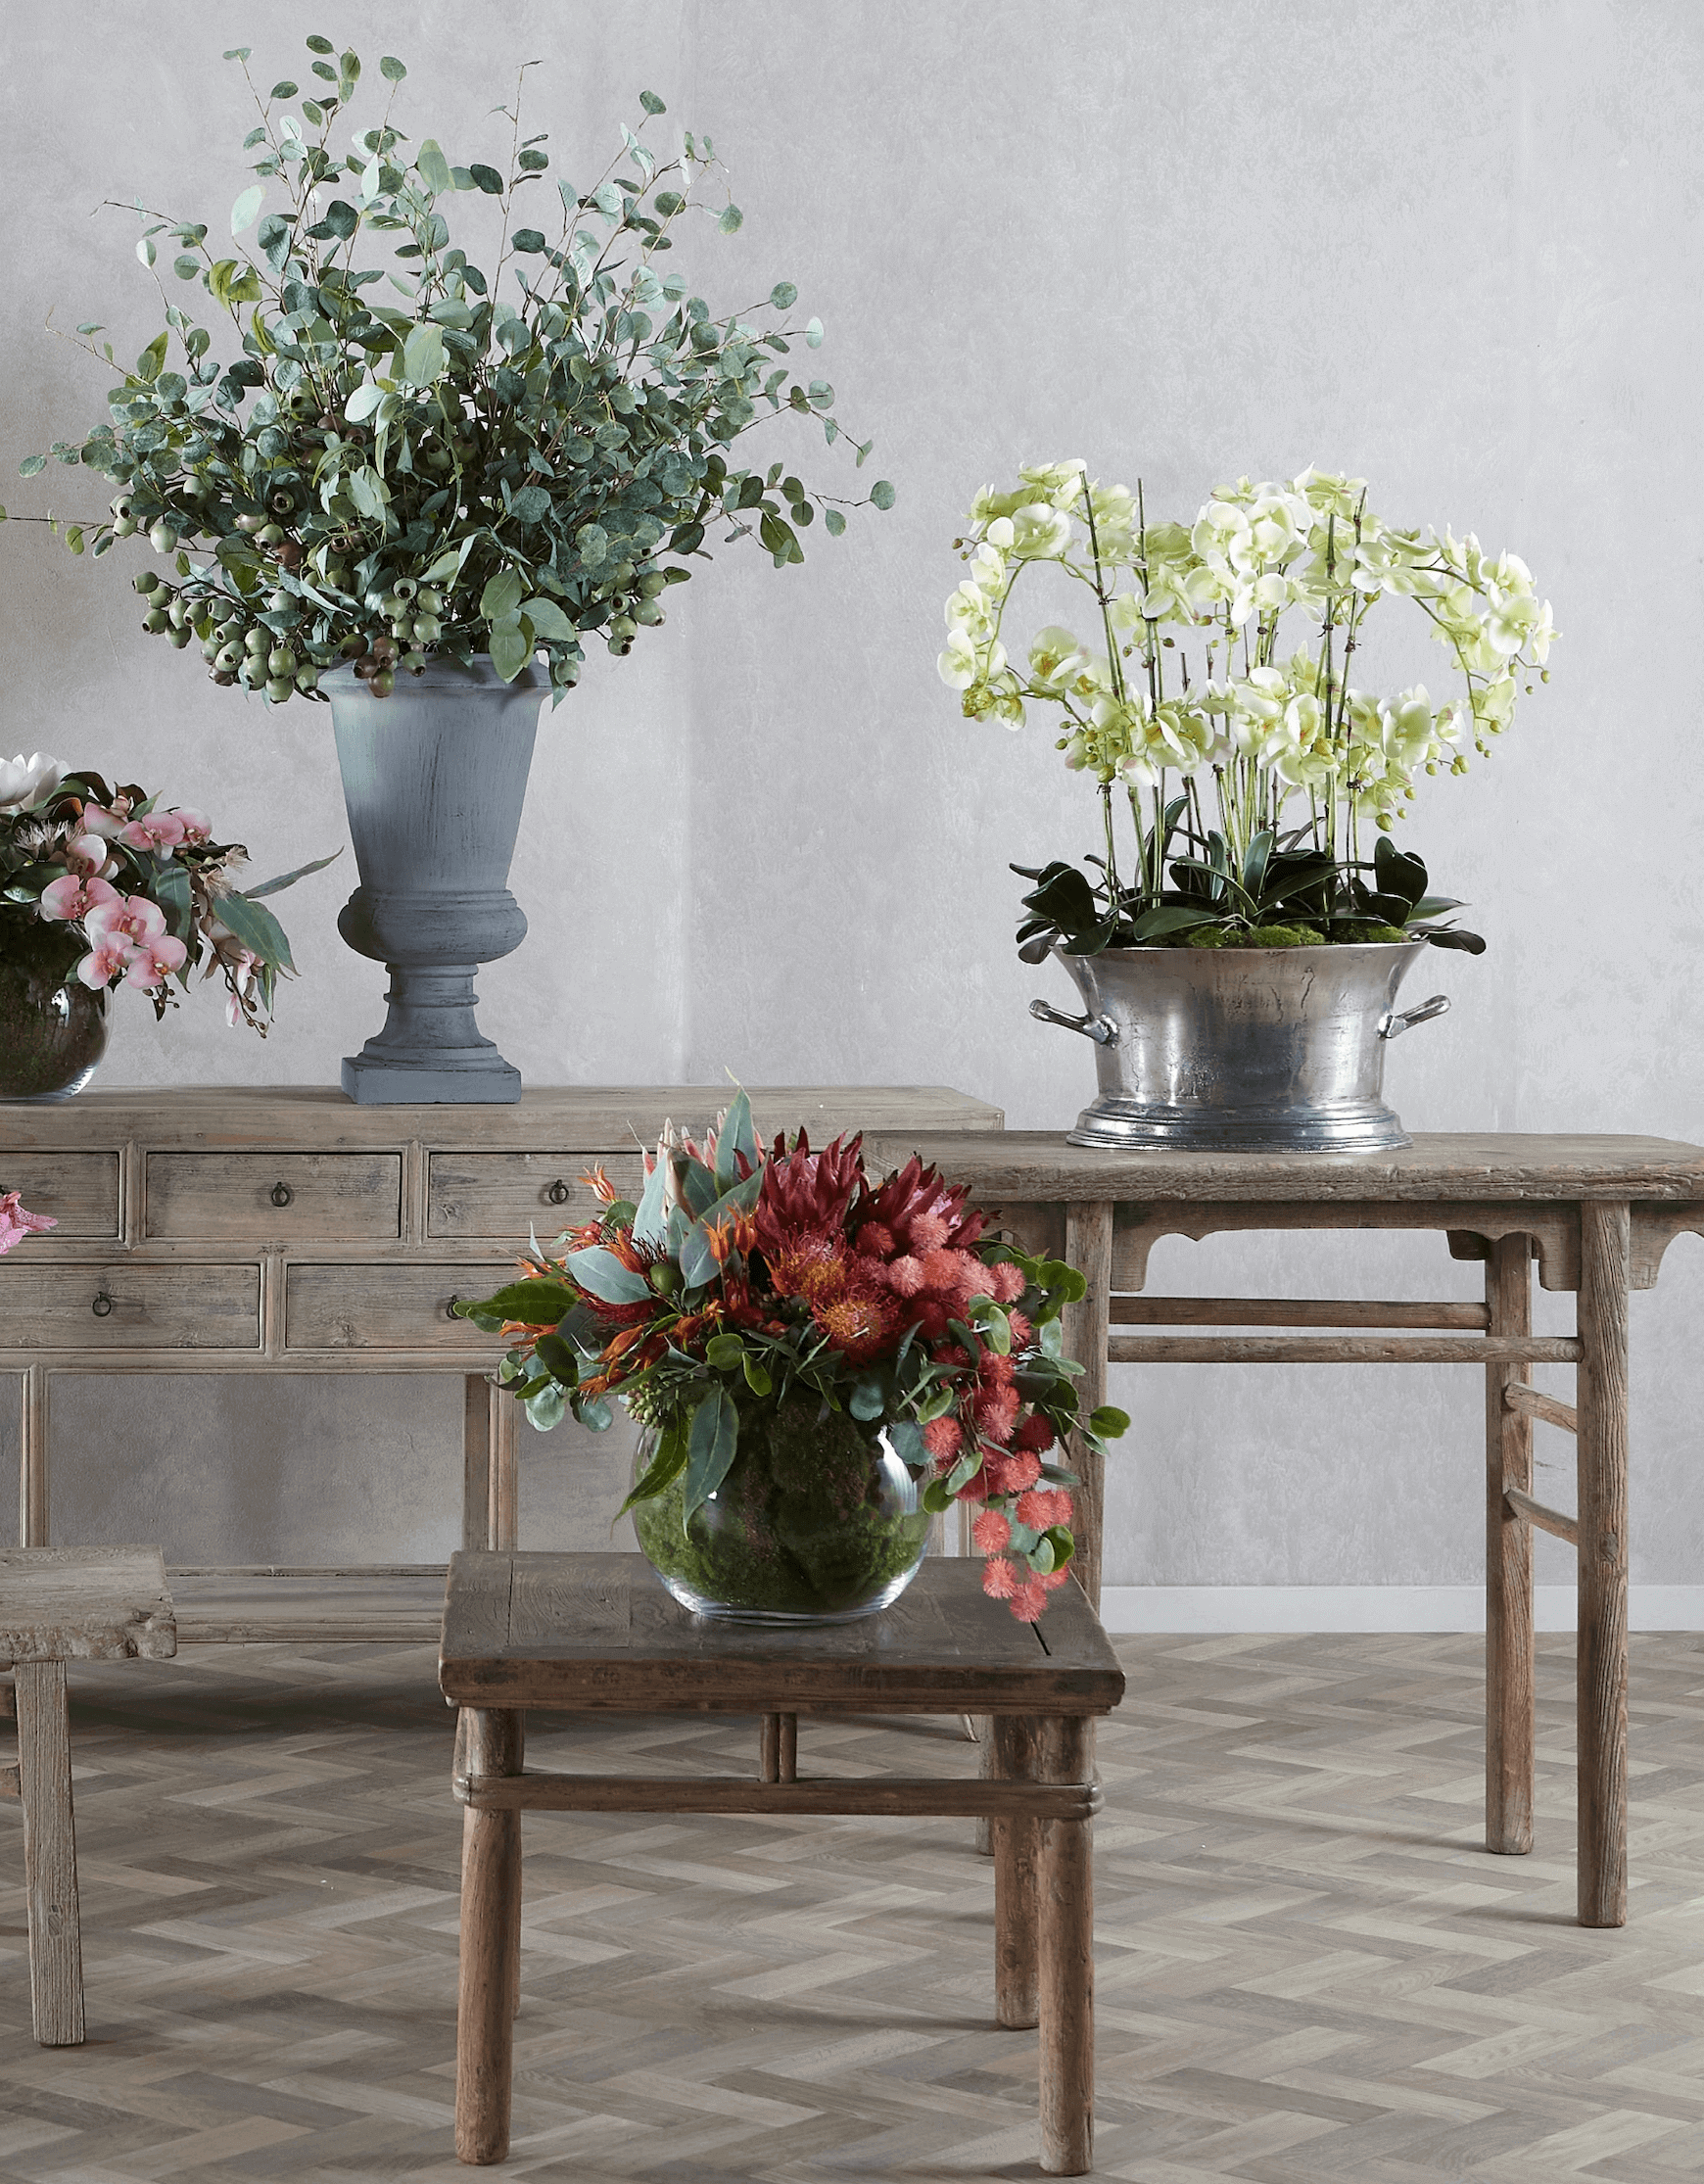 lifelike flower arrangements standing on tables